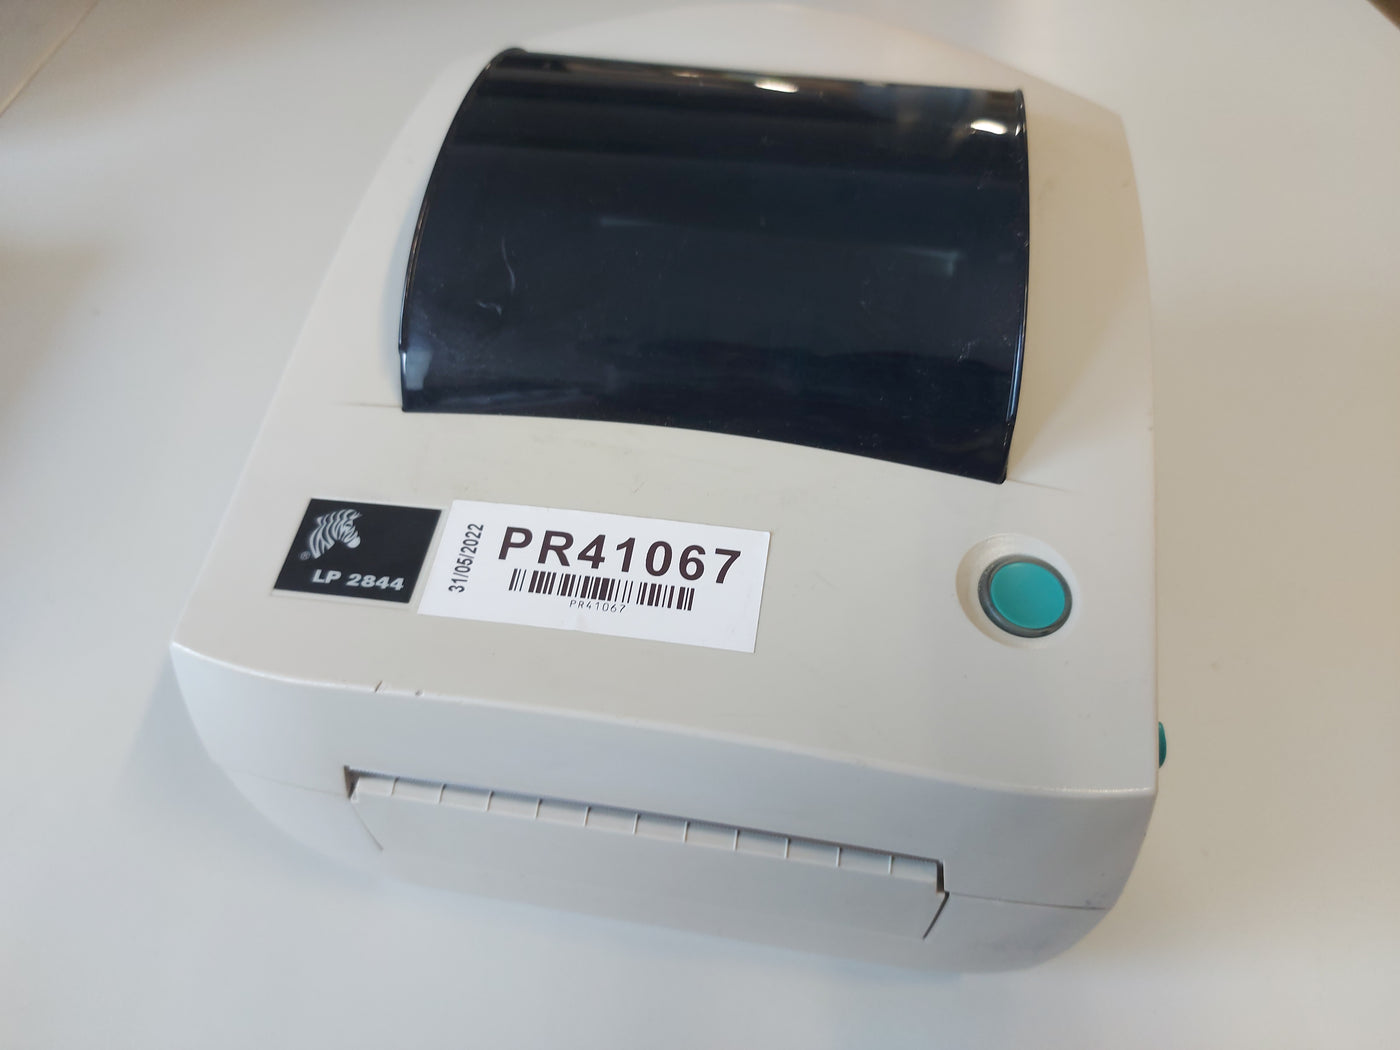 Zebra LP 2844 Direct Thermal Label Printer NO PSU ( LP2844 2844-20320-0001 ) USED